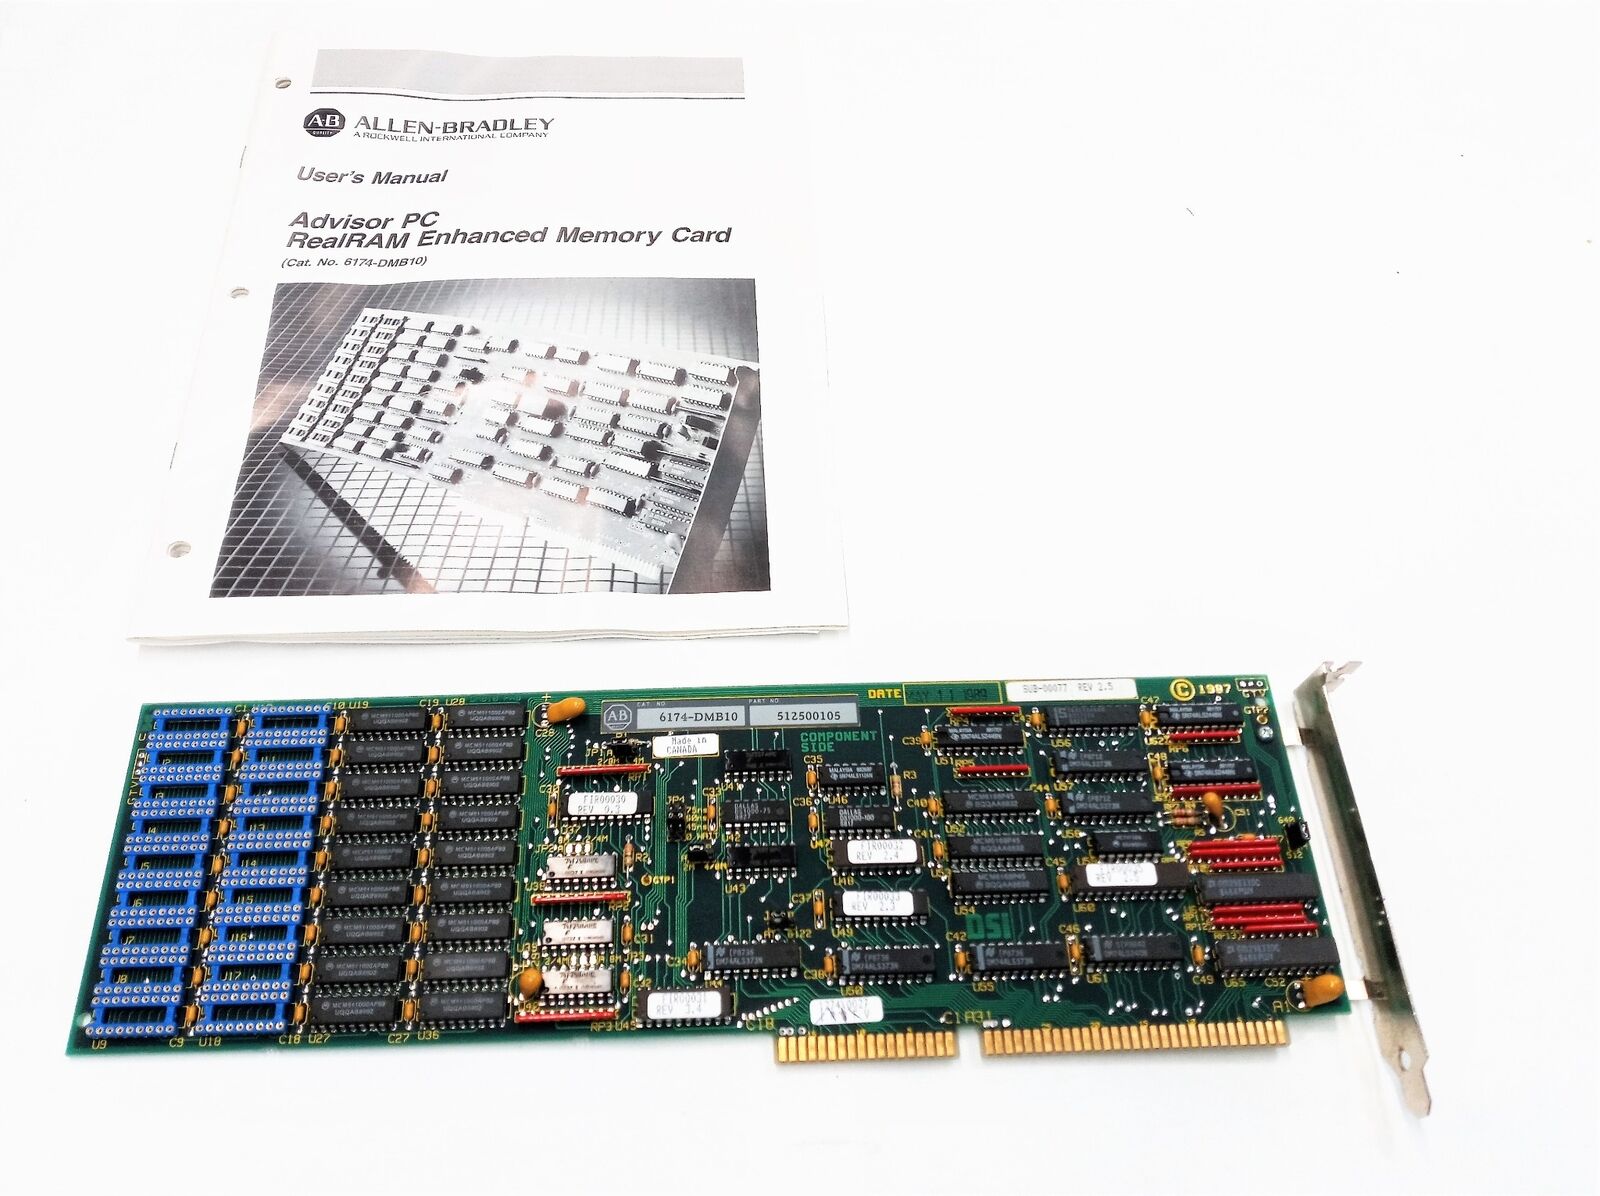 Allen-Bradley Enhanced Memory Card 6174-DMB10/512500105 Rev. 2.5 USED